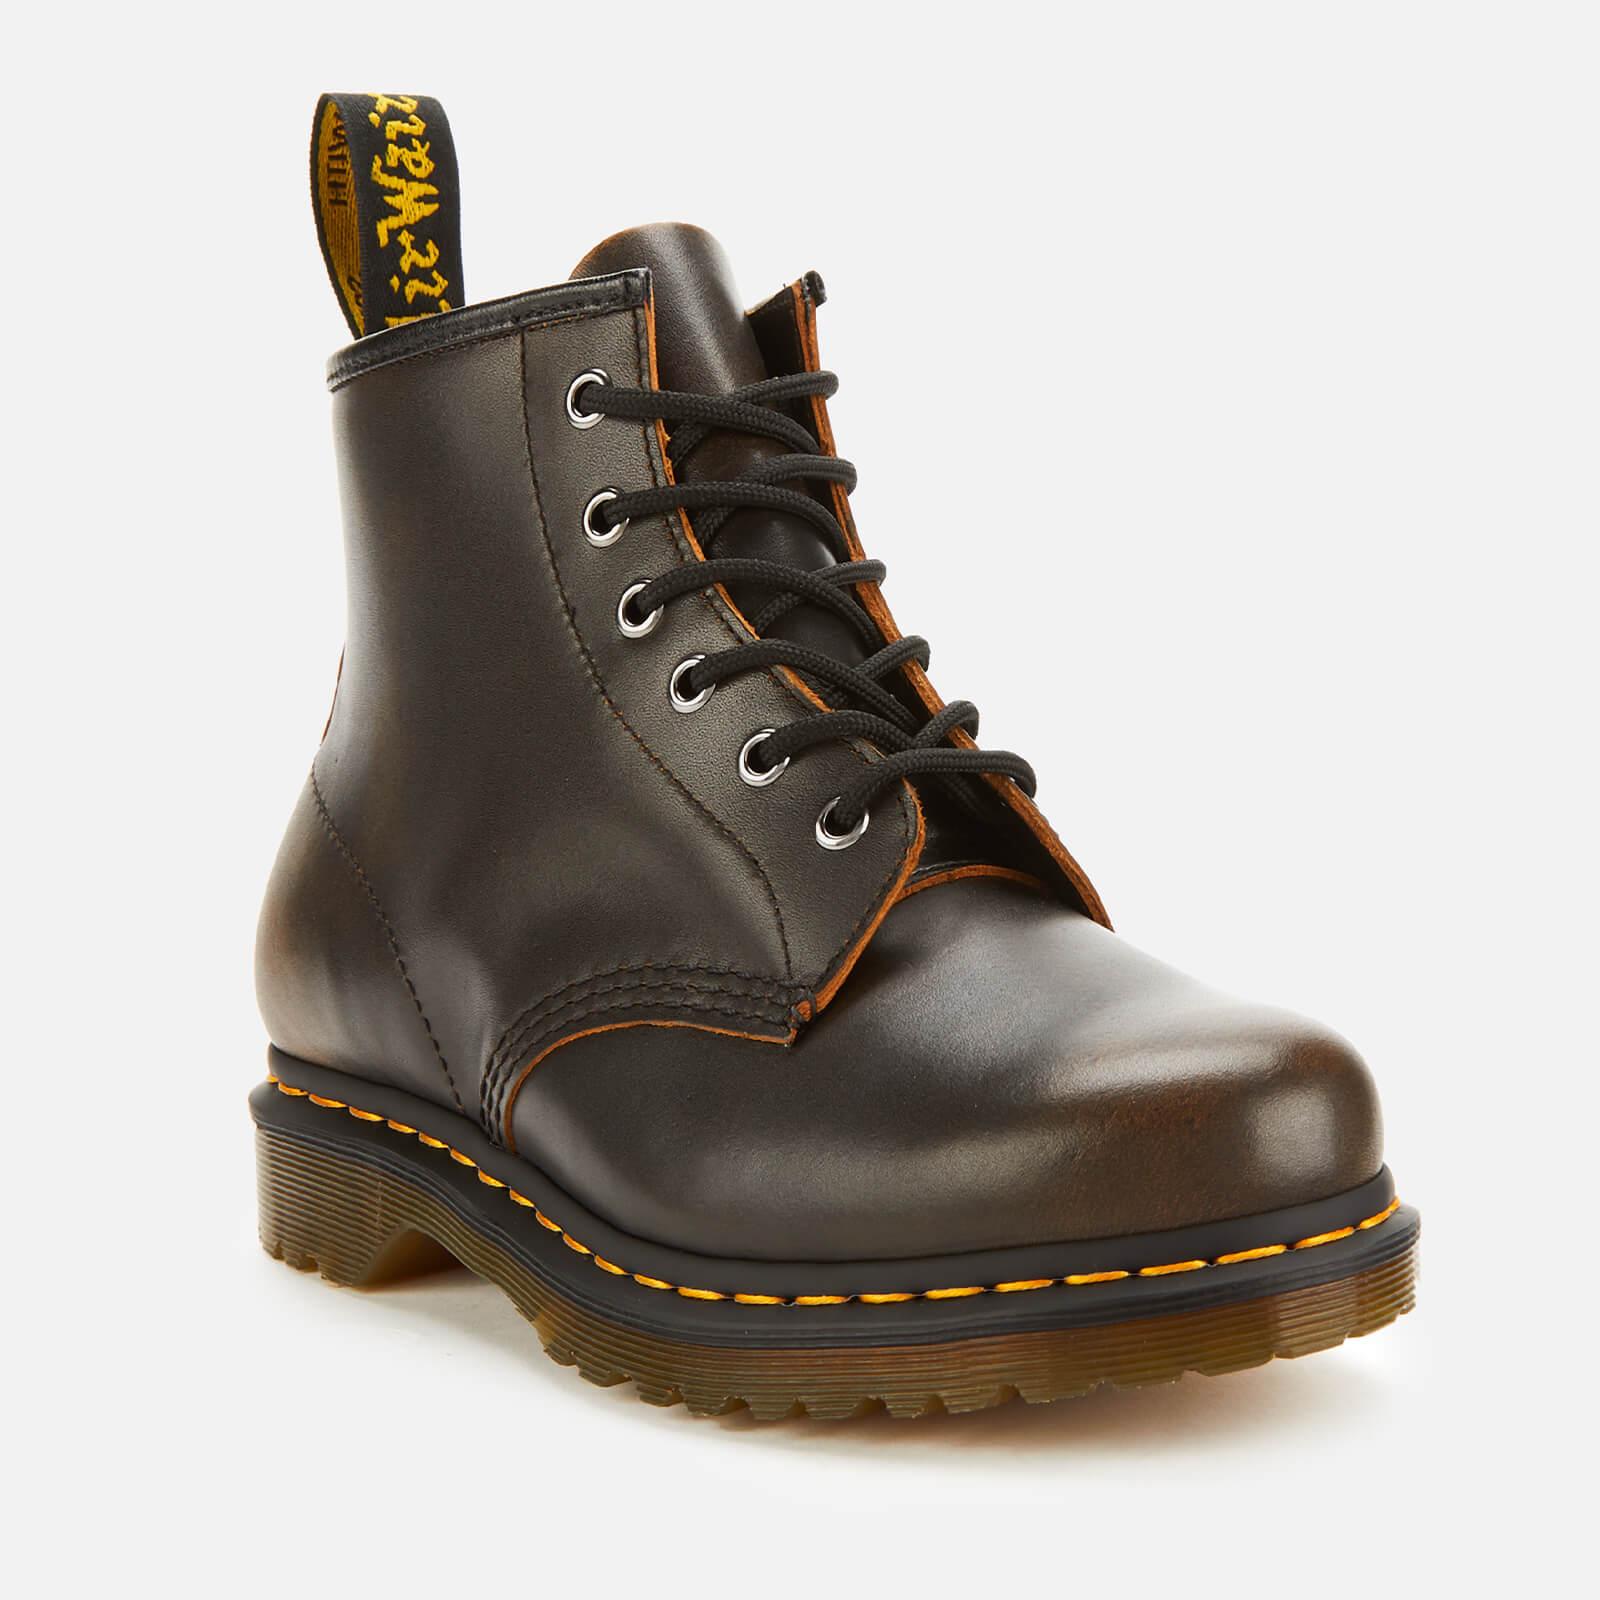 Dr. Martens 101 Vintage Leather 6-eye Boots in Brown for Men - Lyst